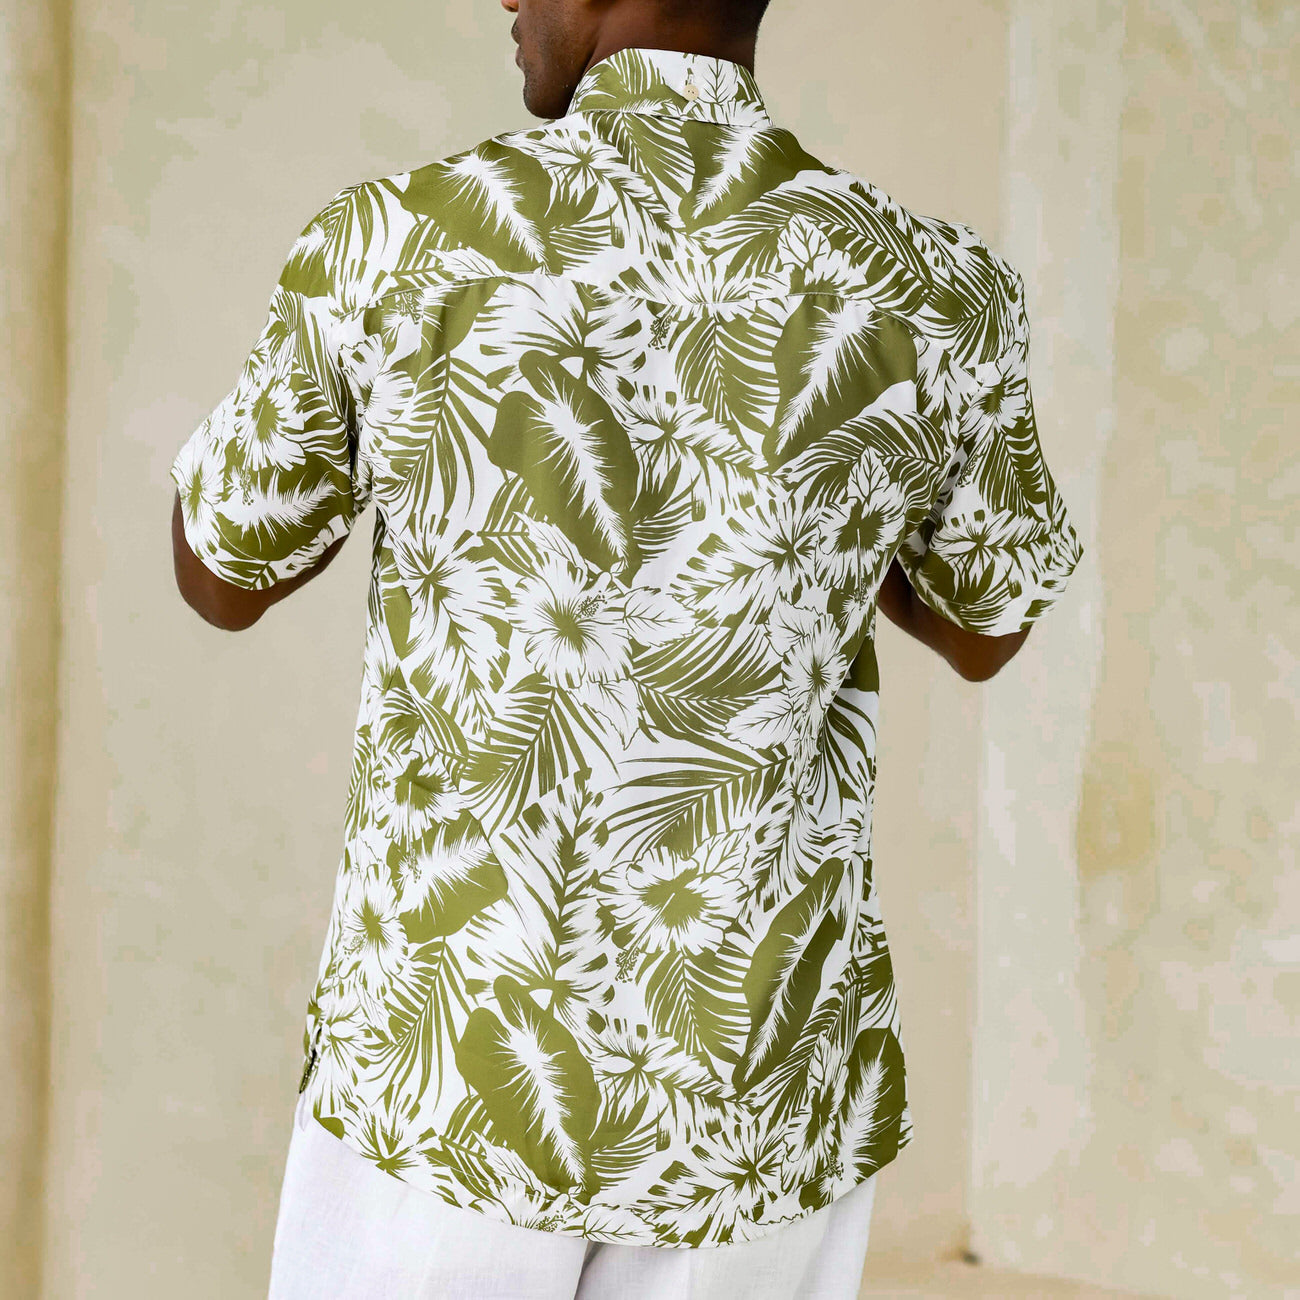 The Bali Hai - Tropical Silk Shirt by Kenny Flowers